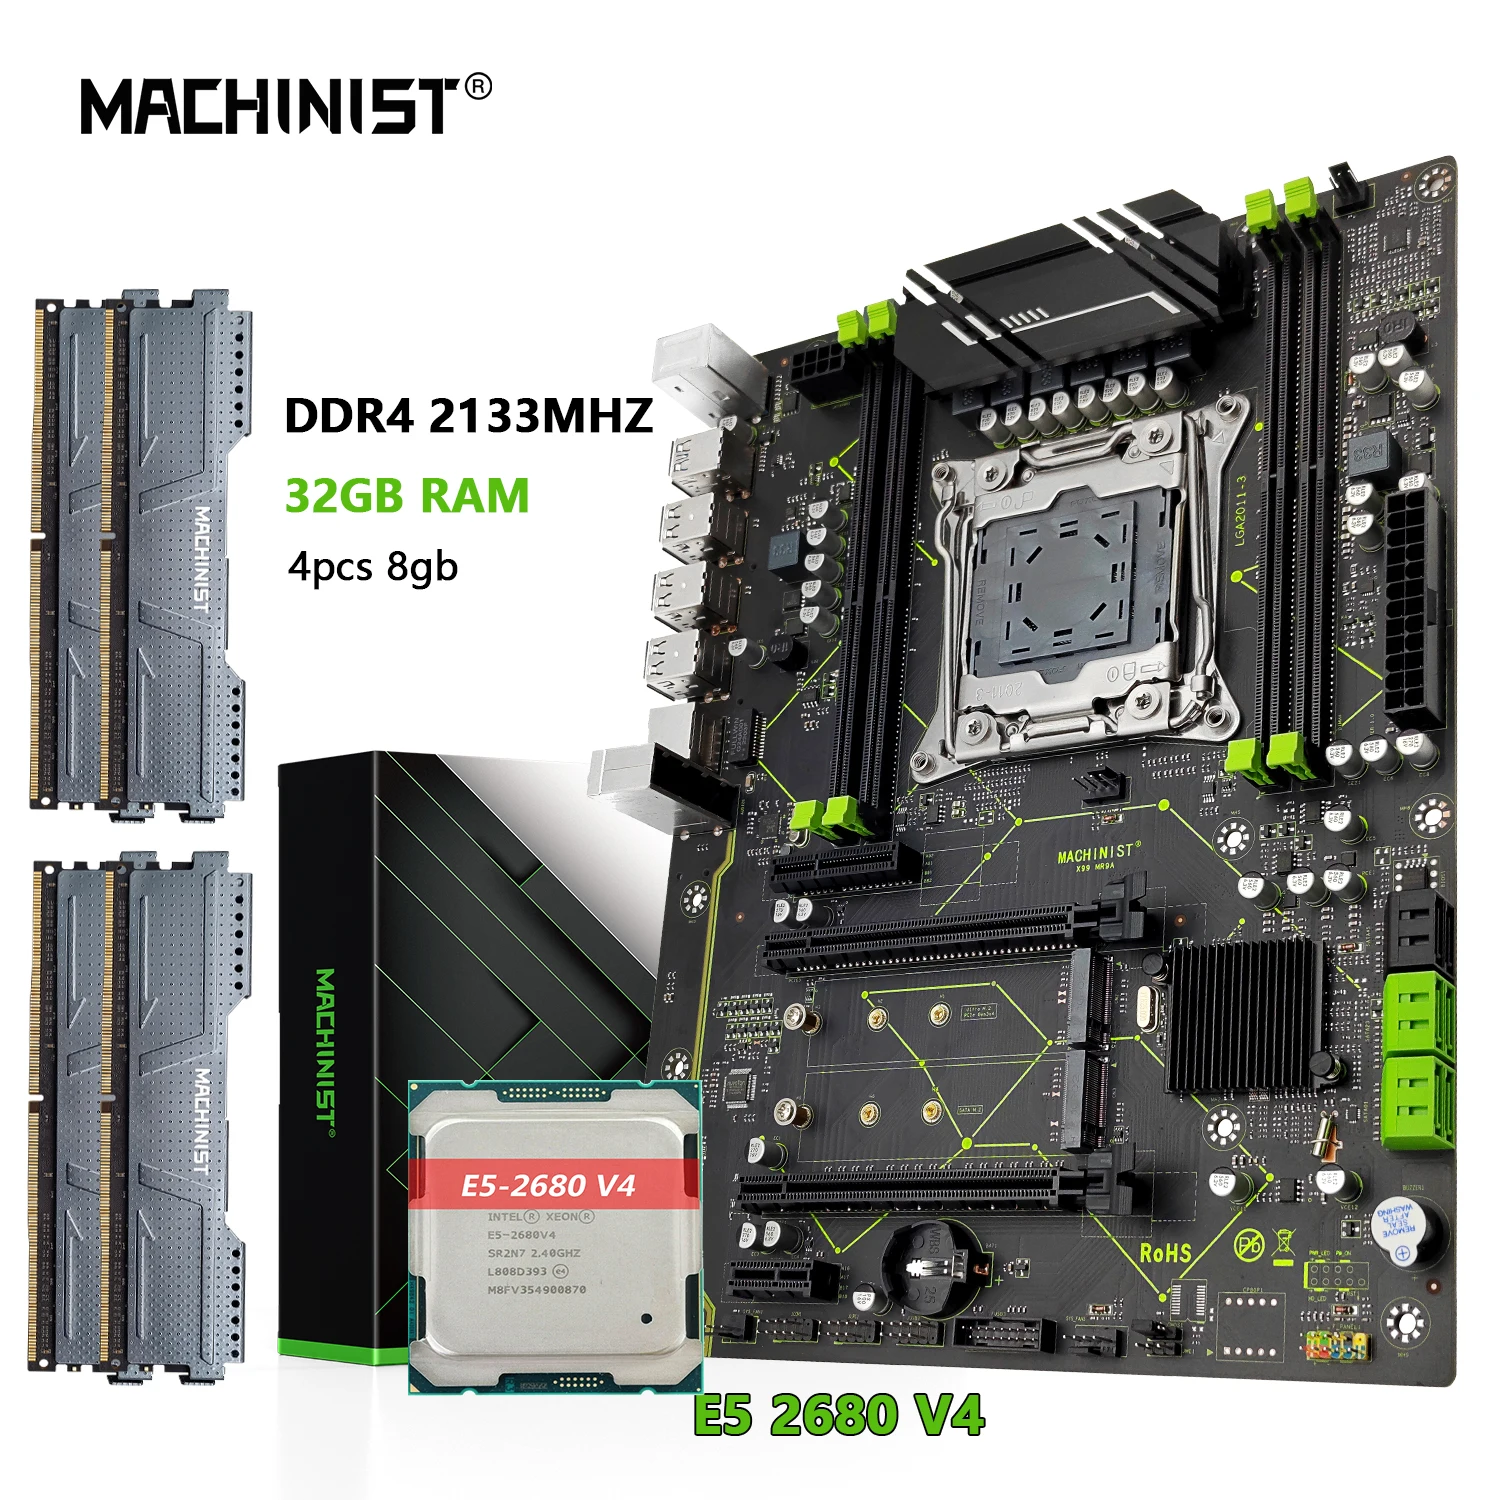 MACHINIST X99 MR9A LGA  2011-3 Motherboard Combo Set kit With Xeon E5 2680 V3 CPU Processor and DDR4 32GB (4pcs x 8gb) Memory